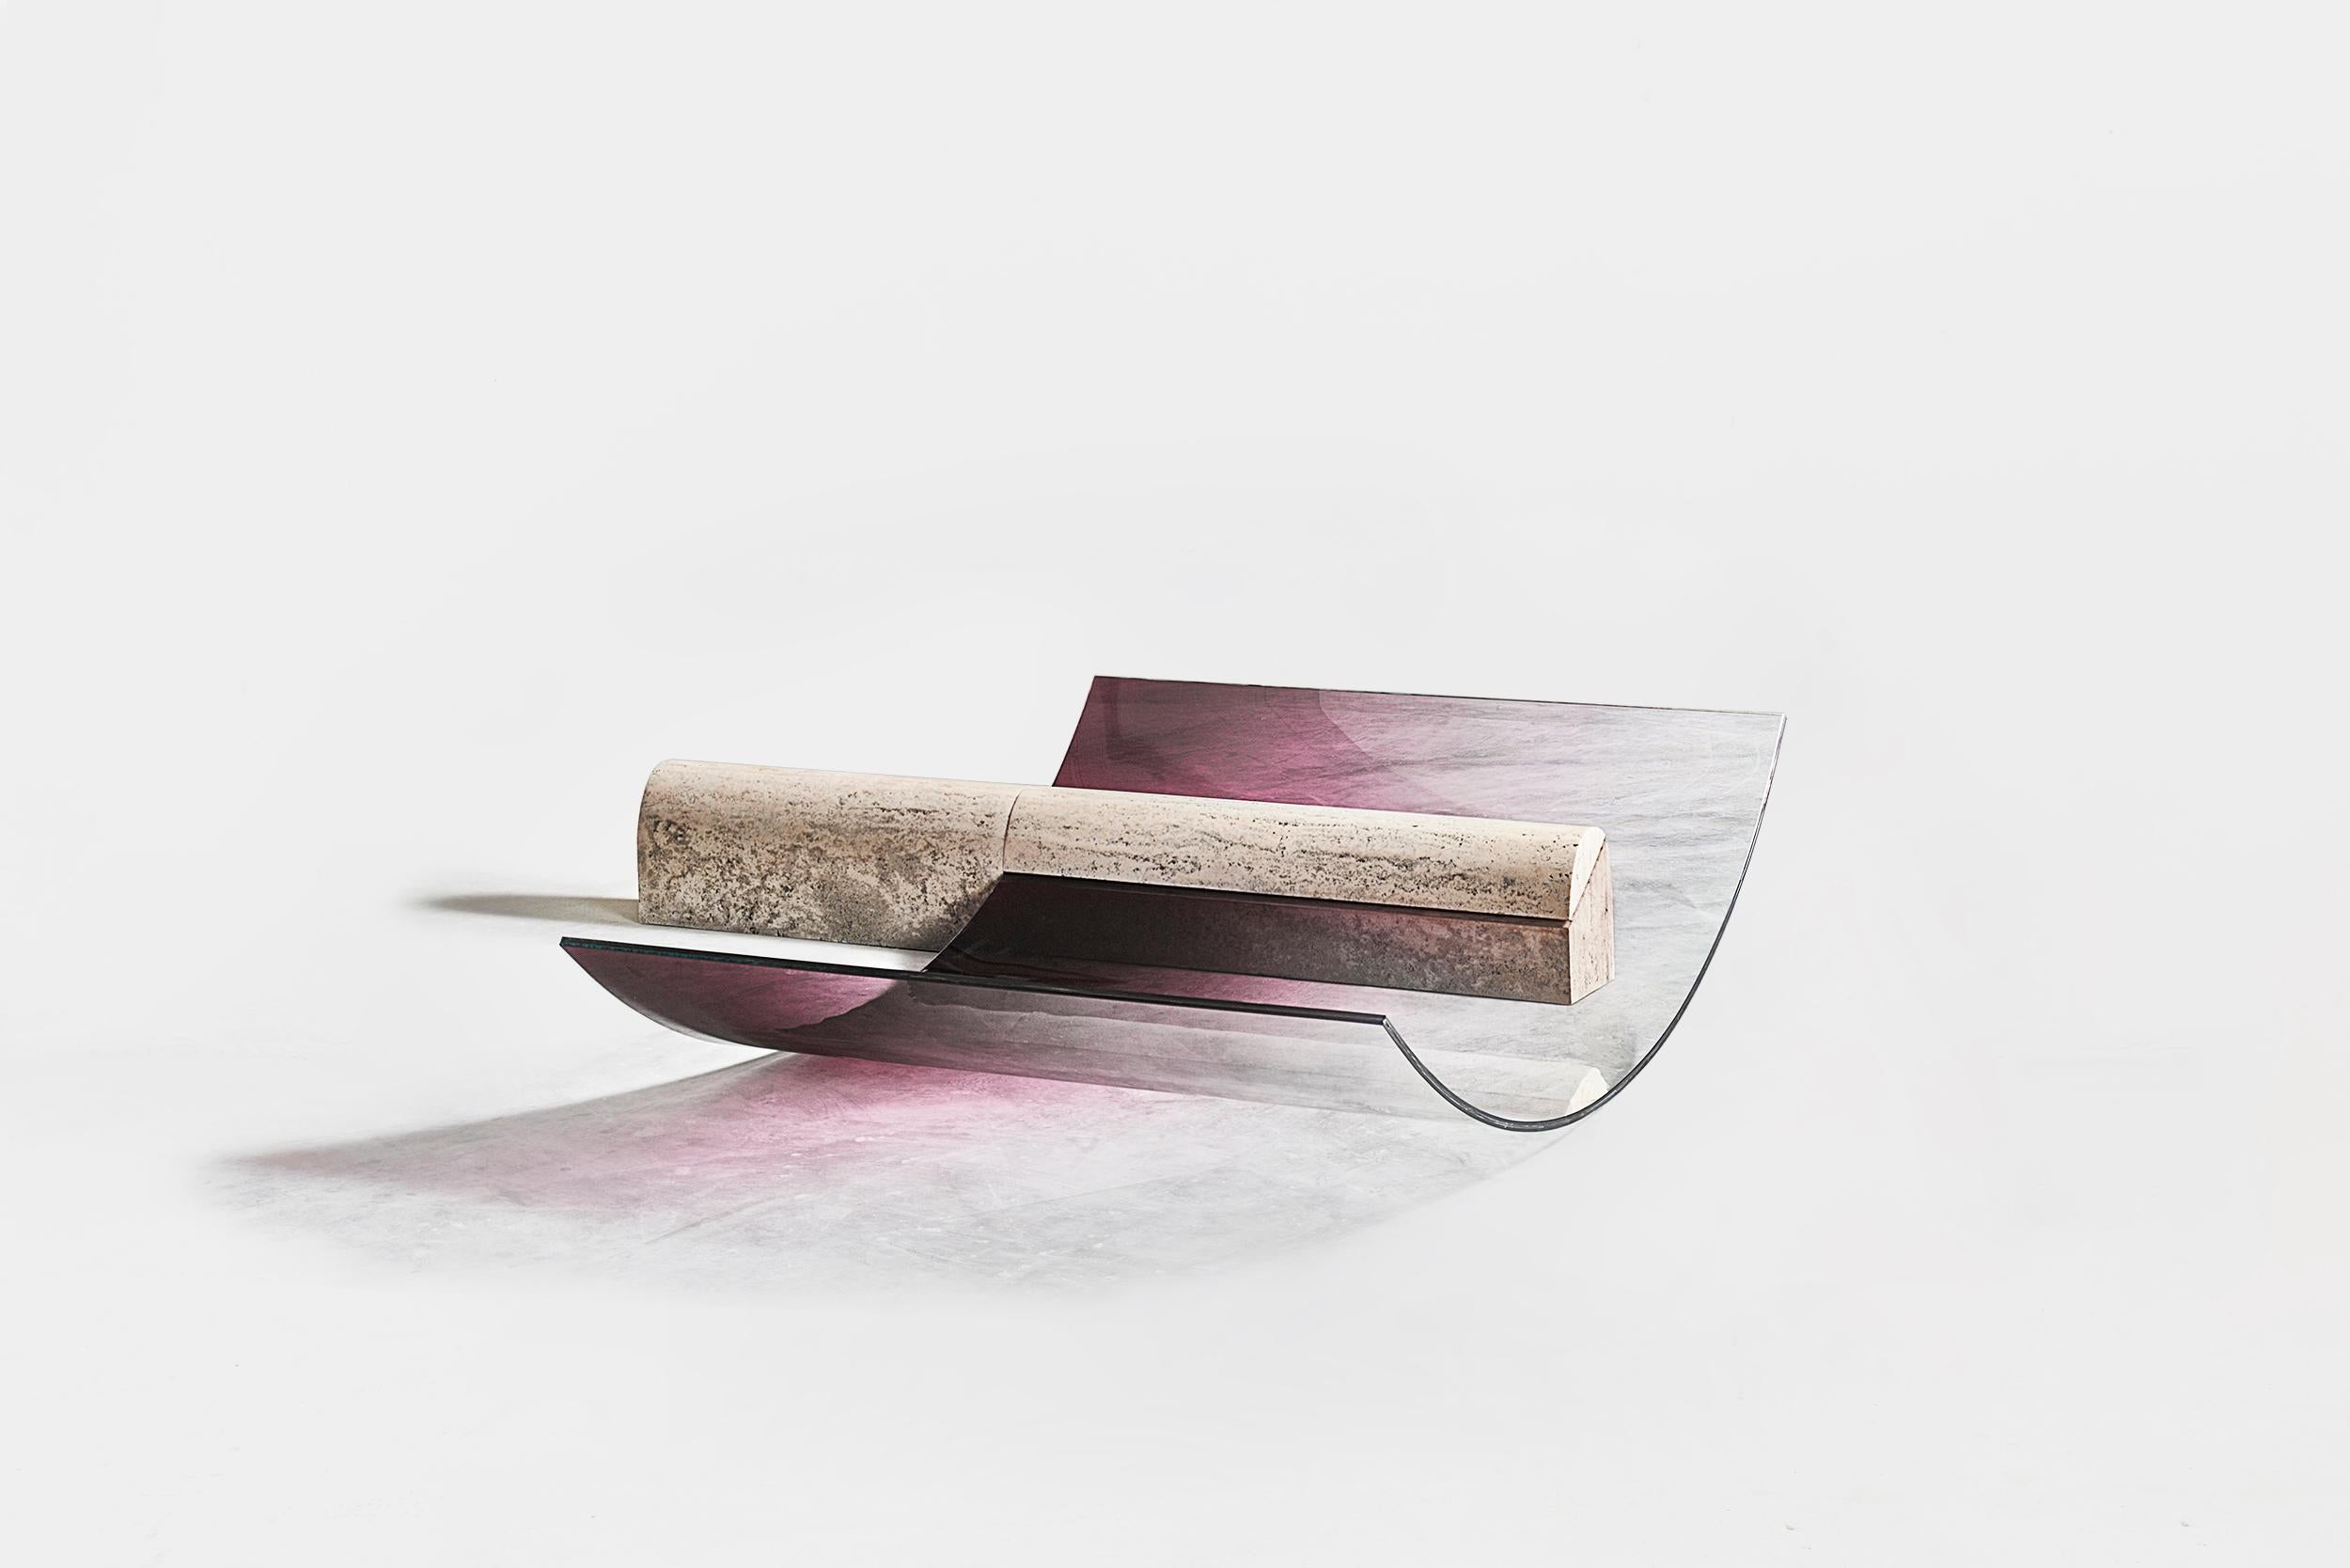 Sabine Marcelis Double Chaise Longue aus der Serie No Fear of Glass, 2019 (Moderne) im Angebot